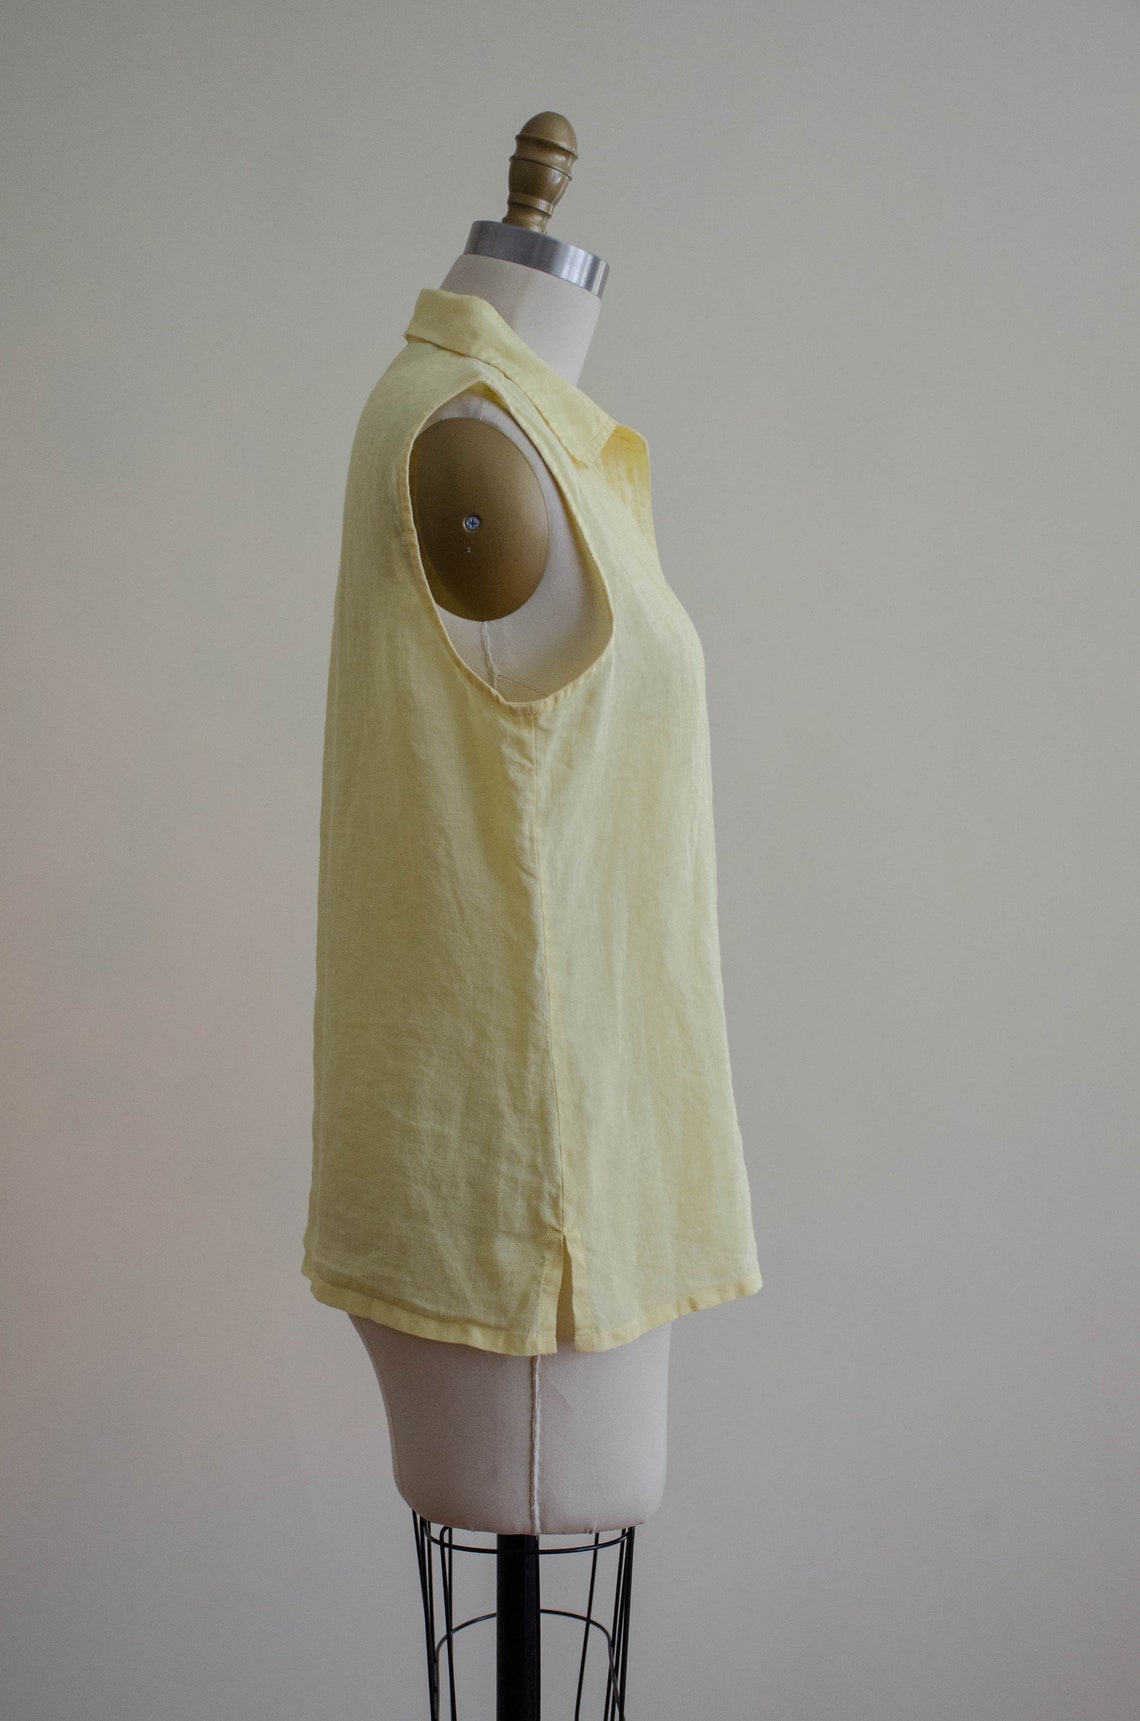 Sleeveless yellow blouse yellow linen blouse | Etsy